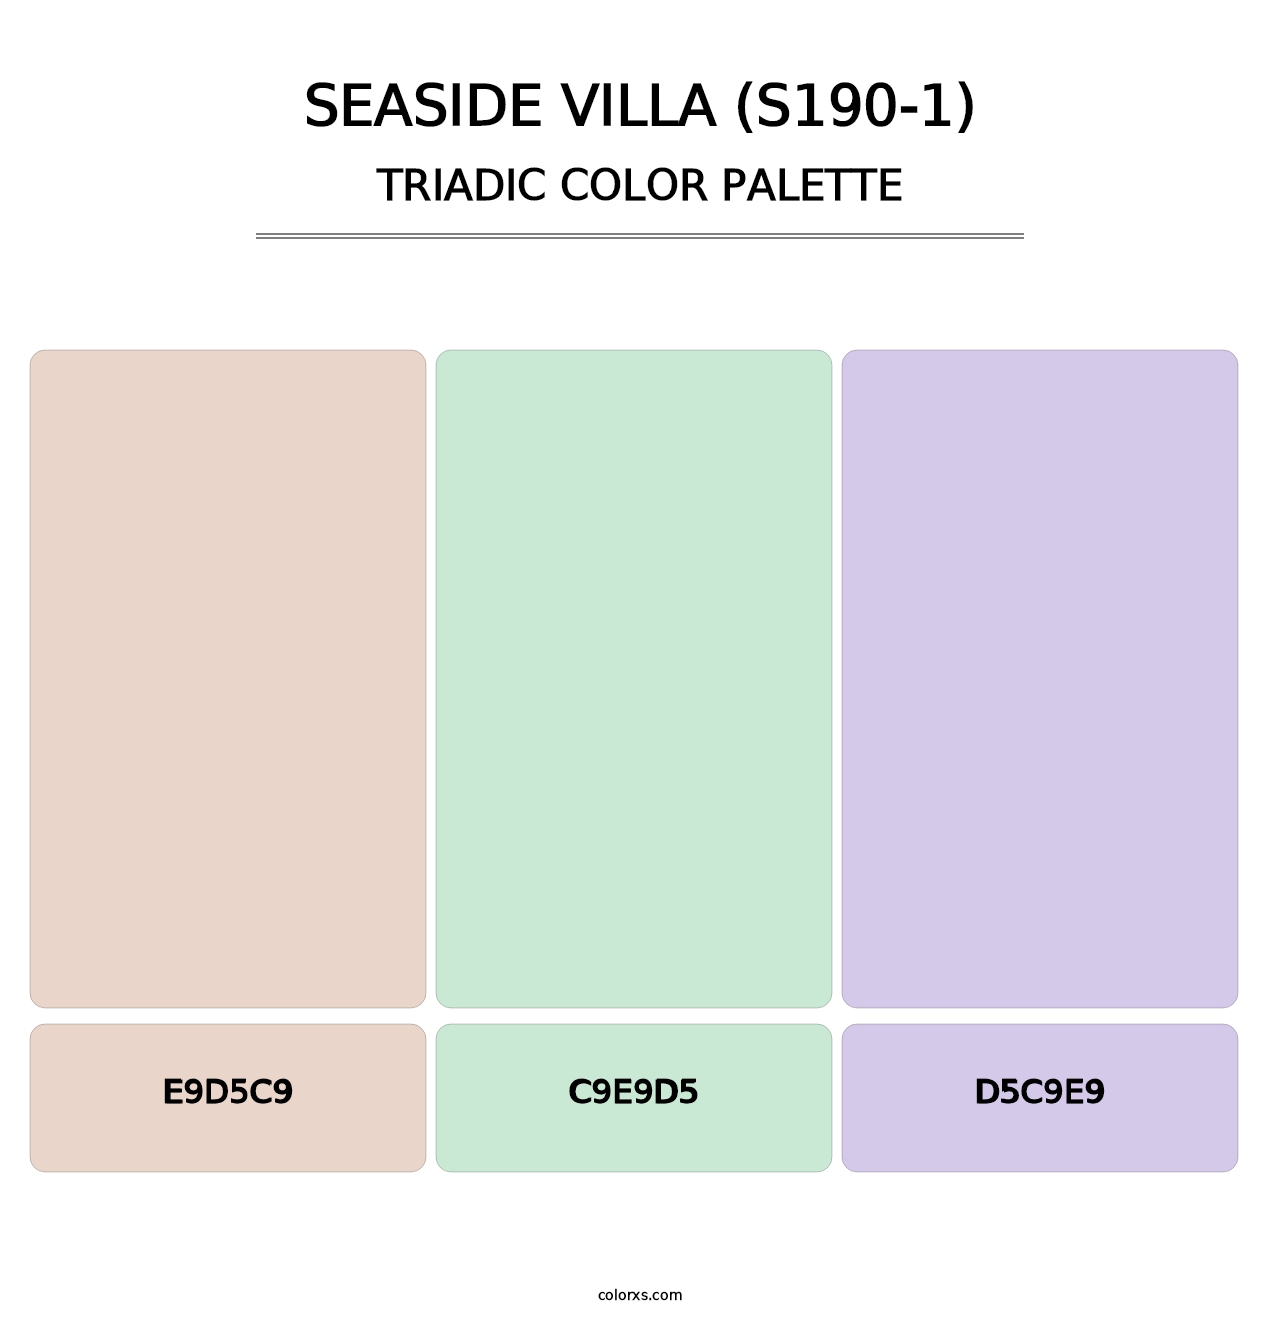 Seaside Villa (S190-1) - Triadic Color Palette